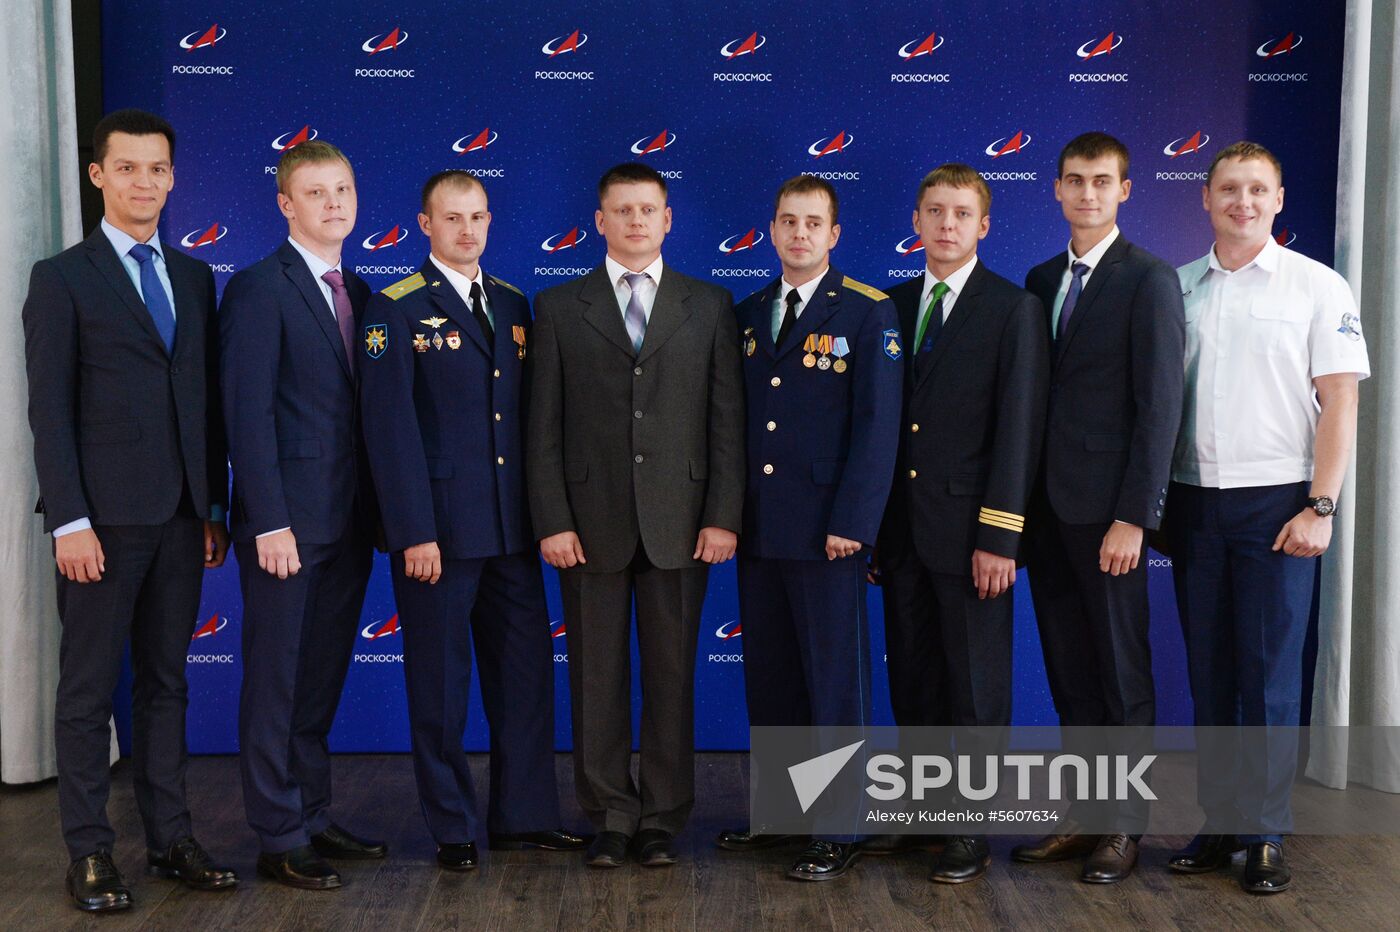 Introduction of Roscosmos cosmonaut candidates